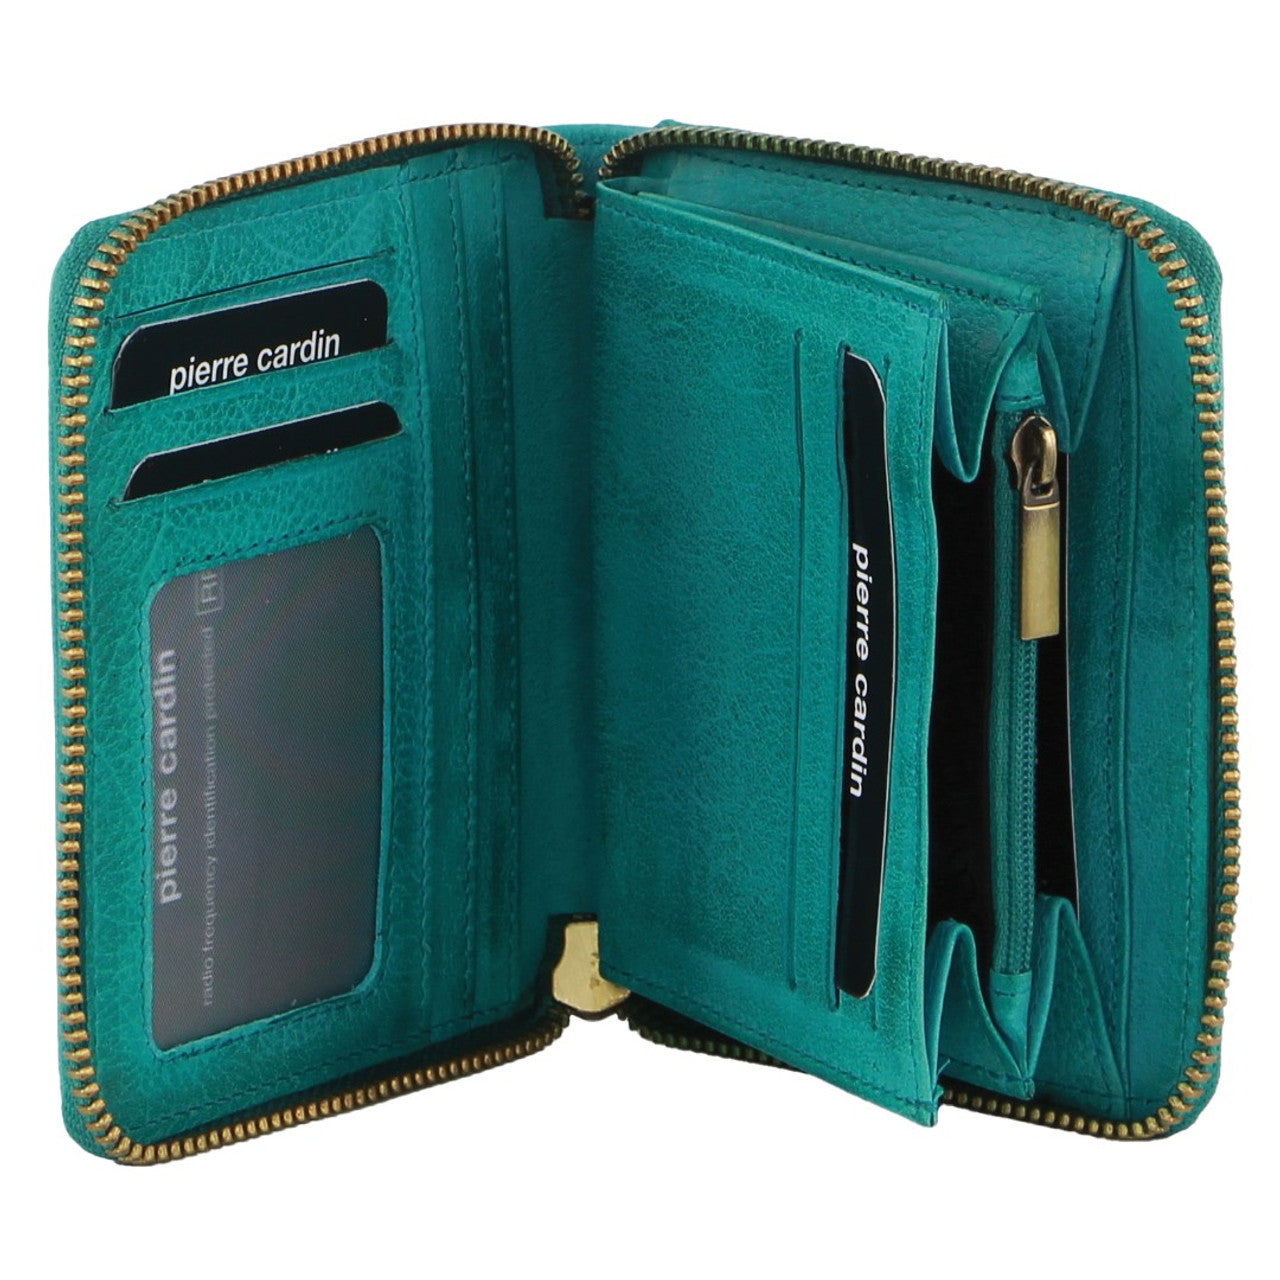 Pierre Cardin - PC3633 Small zip Wallet - Turquoise-2